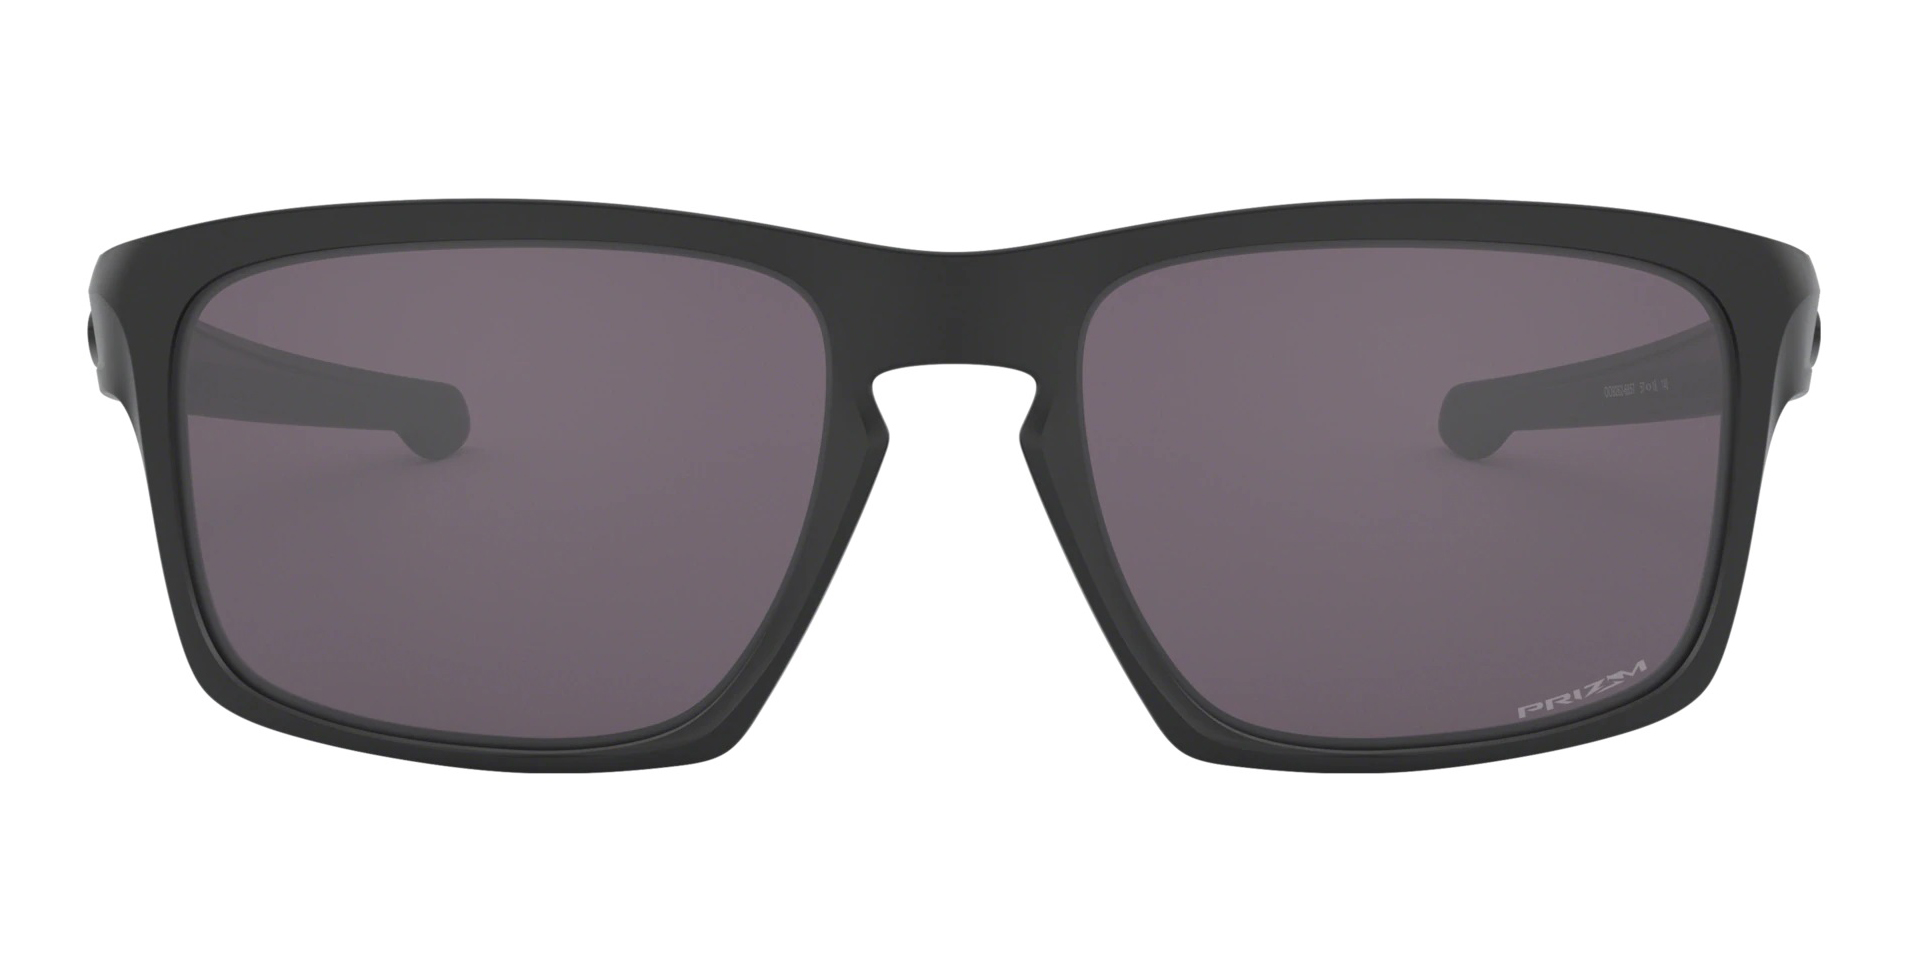 oakley sunglasses vision express